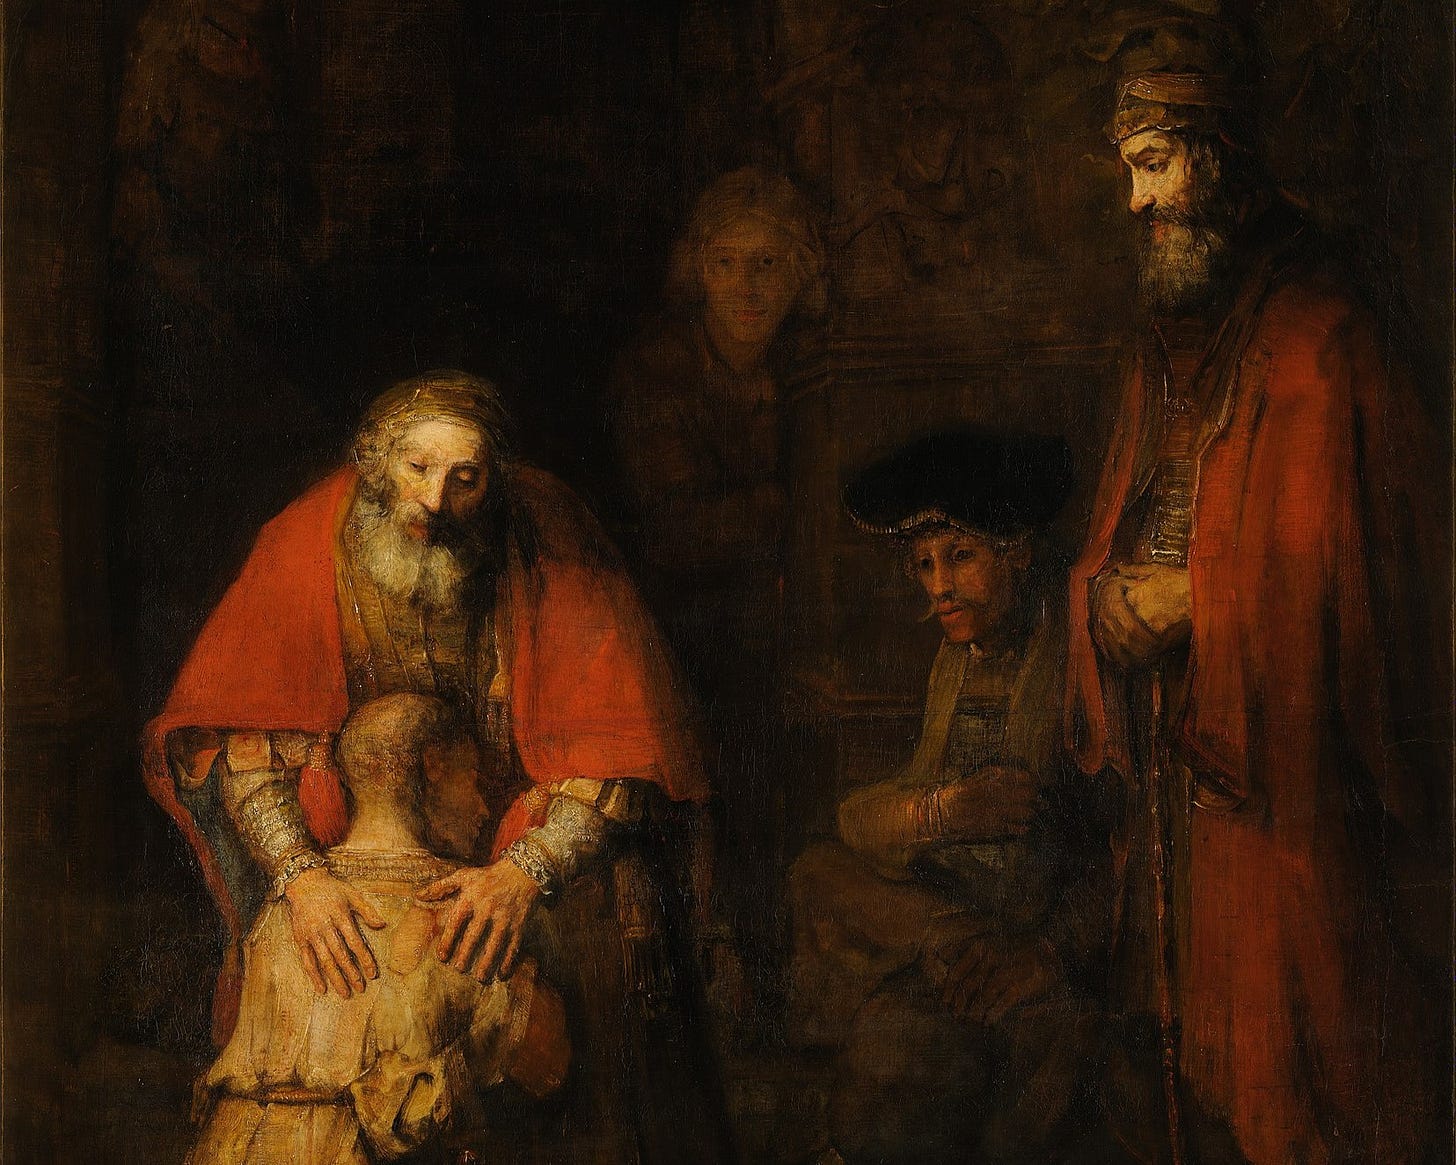 Return of the Prodigal Son by Rembrandt van Rijn, 1661-69 (Wikipedia - public domain)